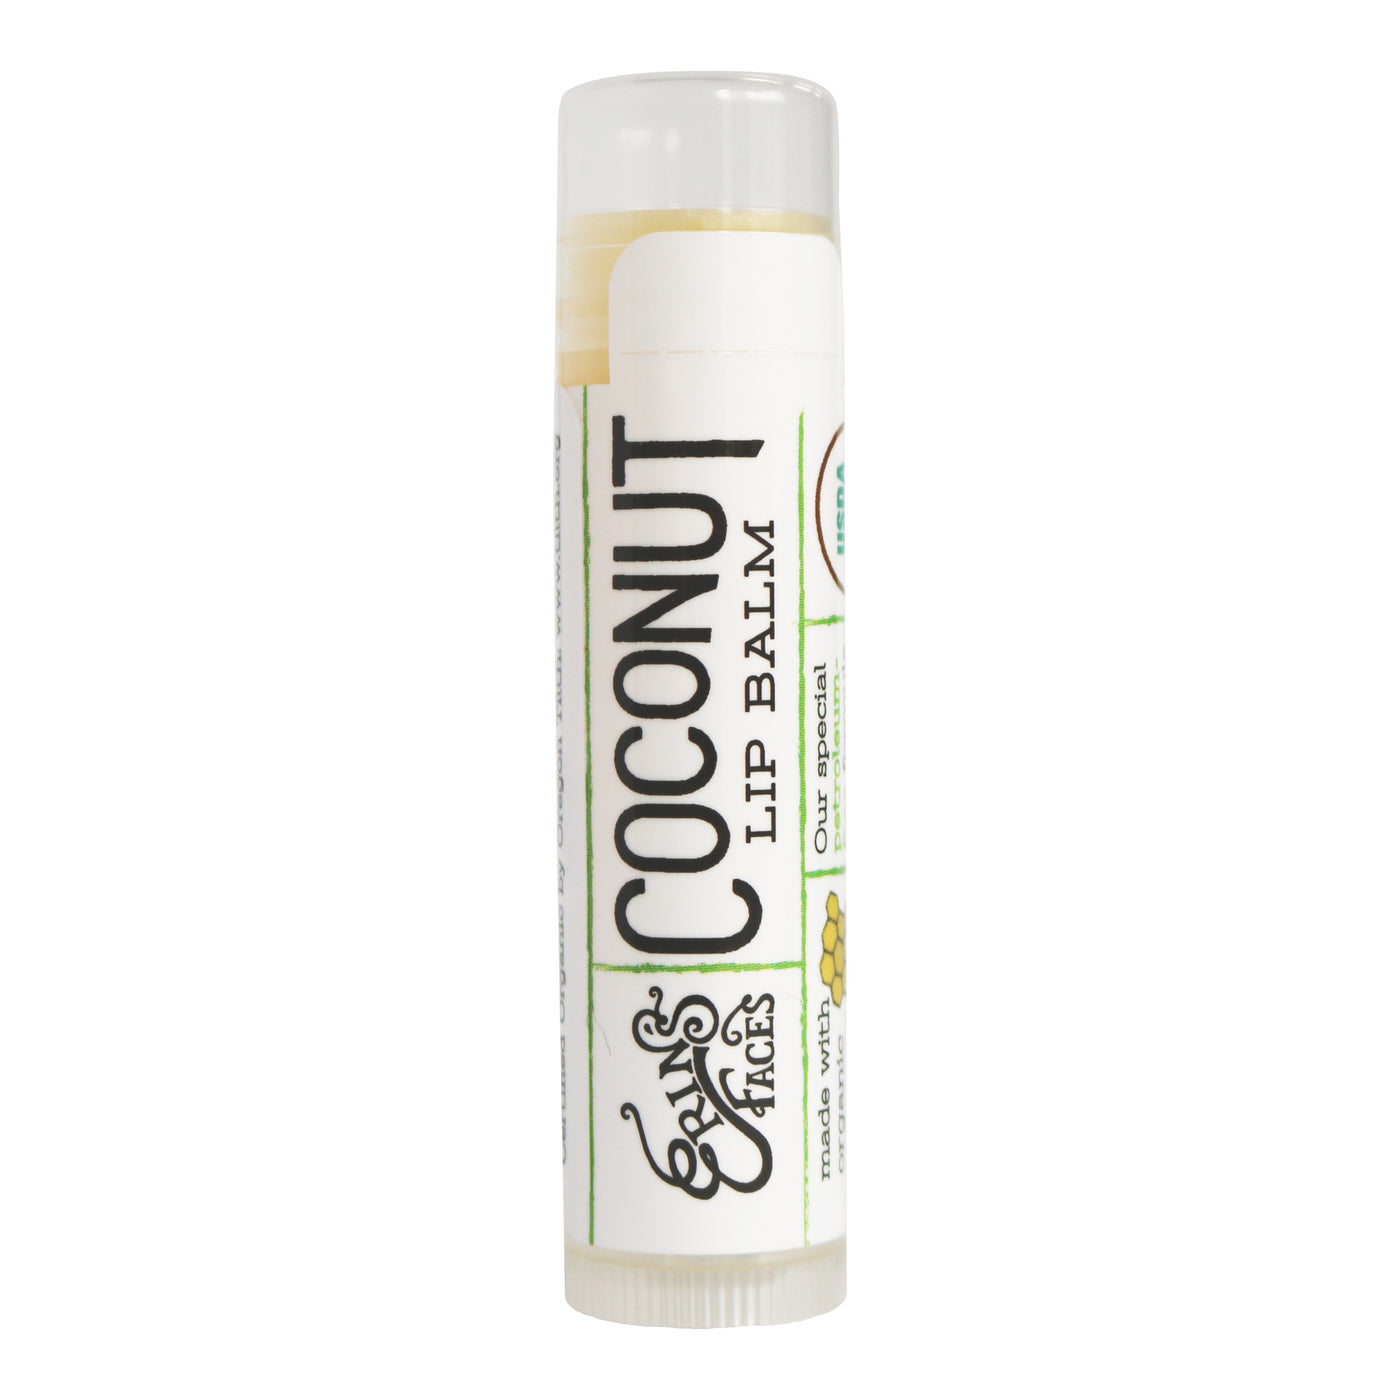 organic hydration lip balm in the scent coconut